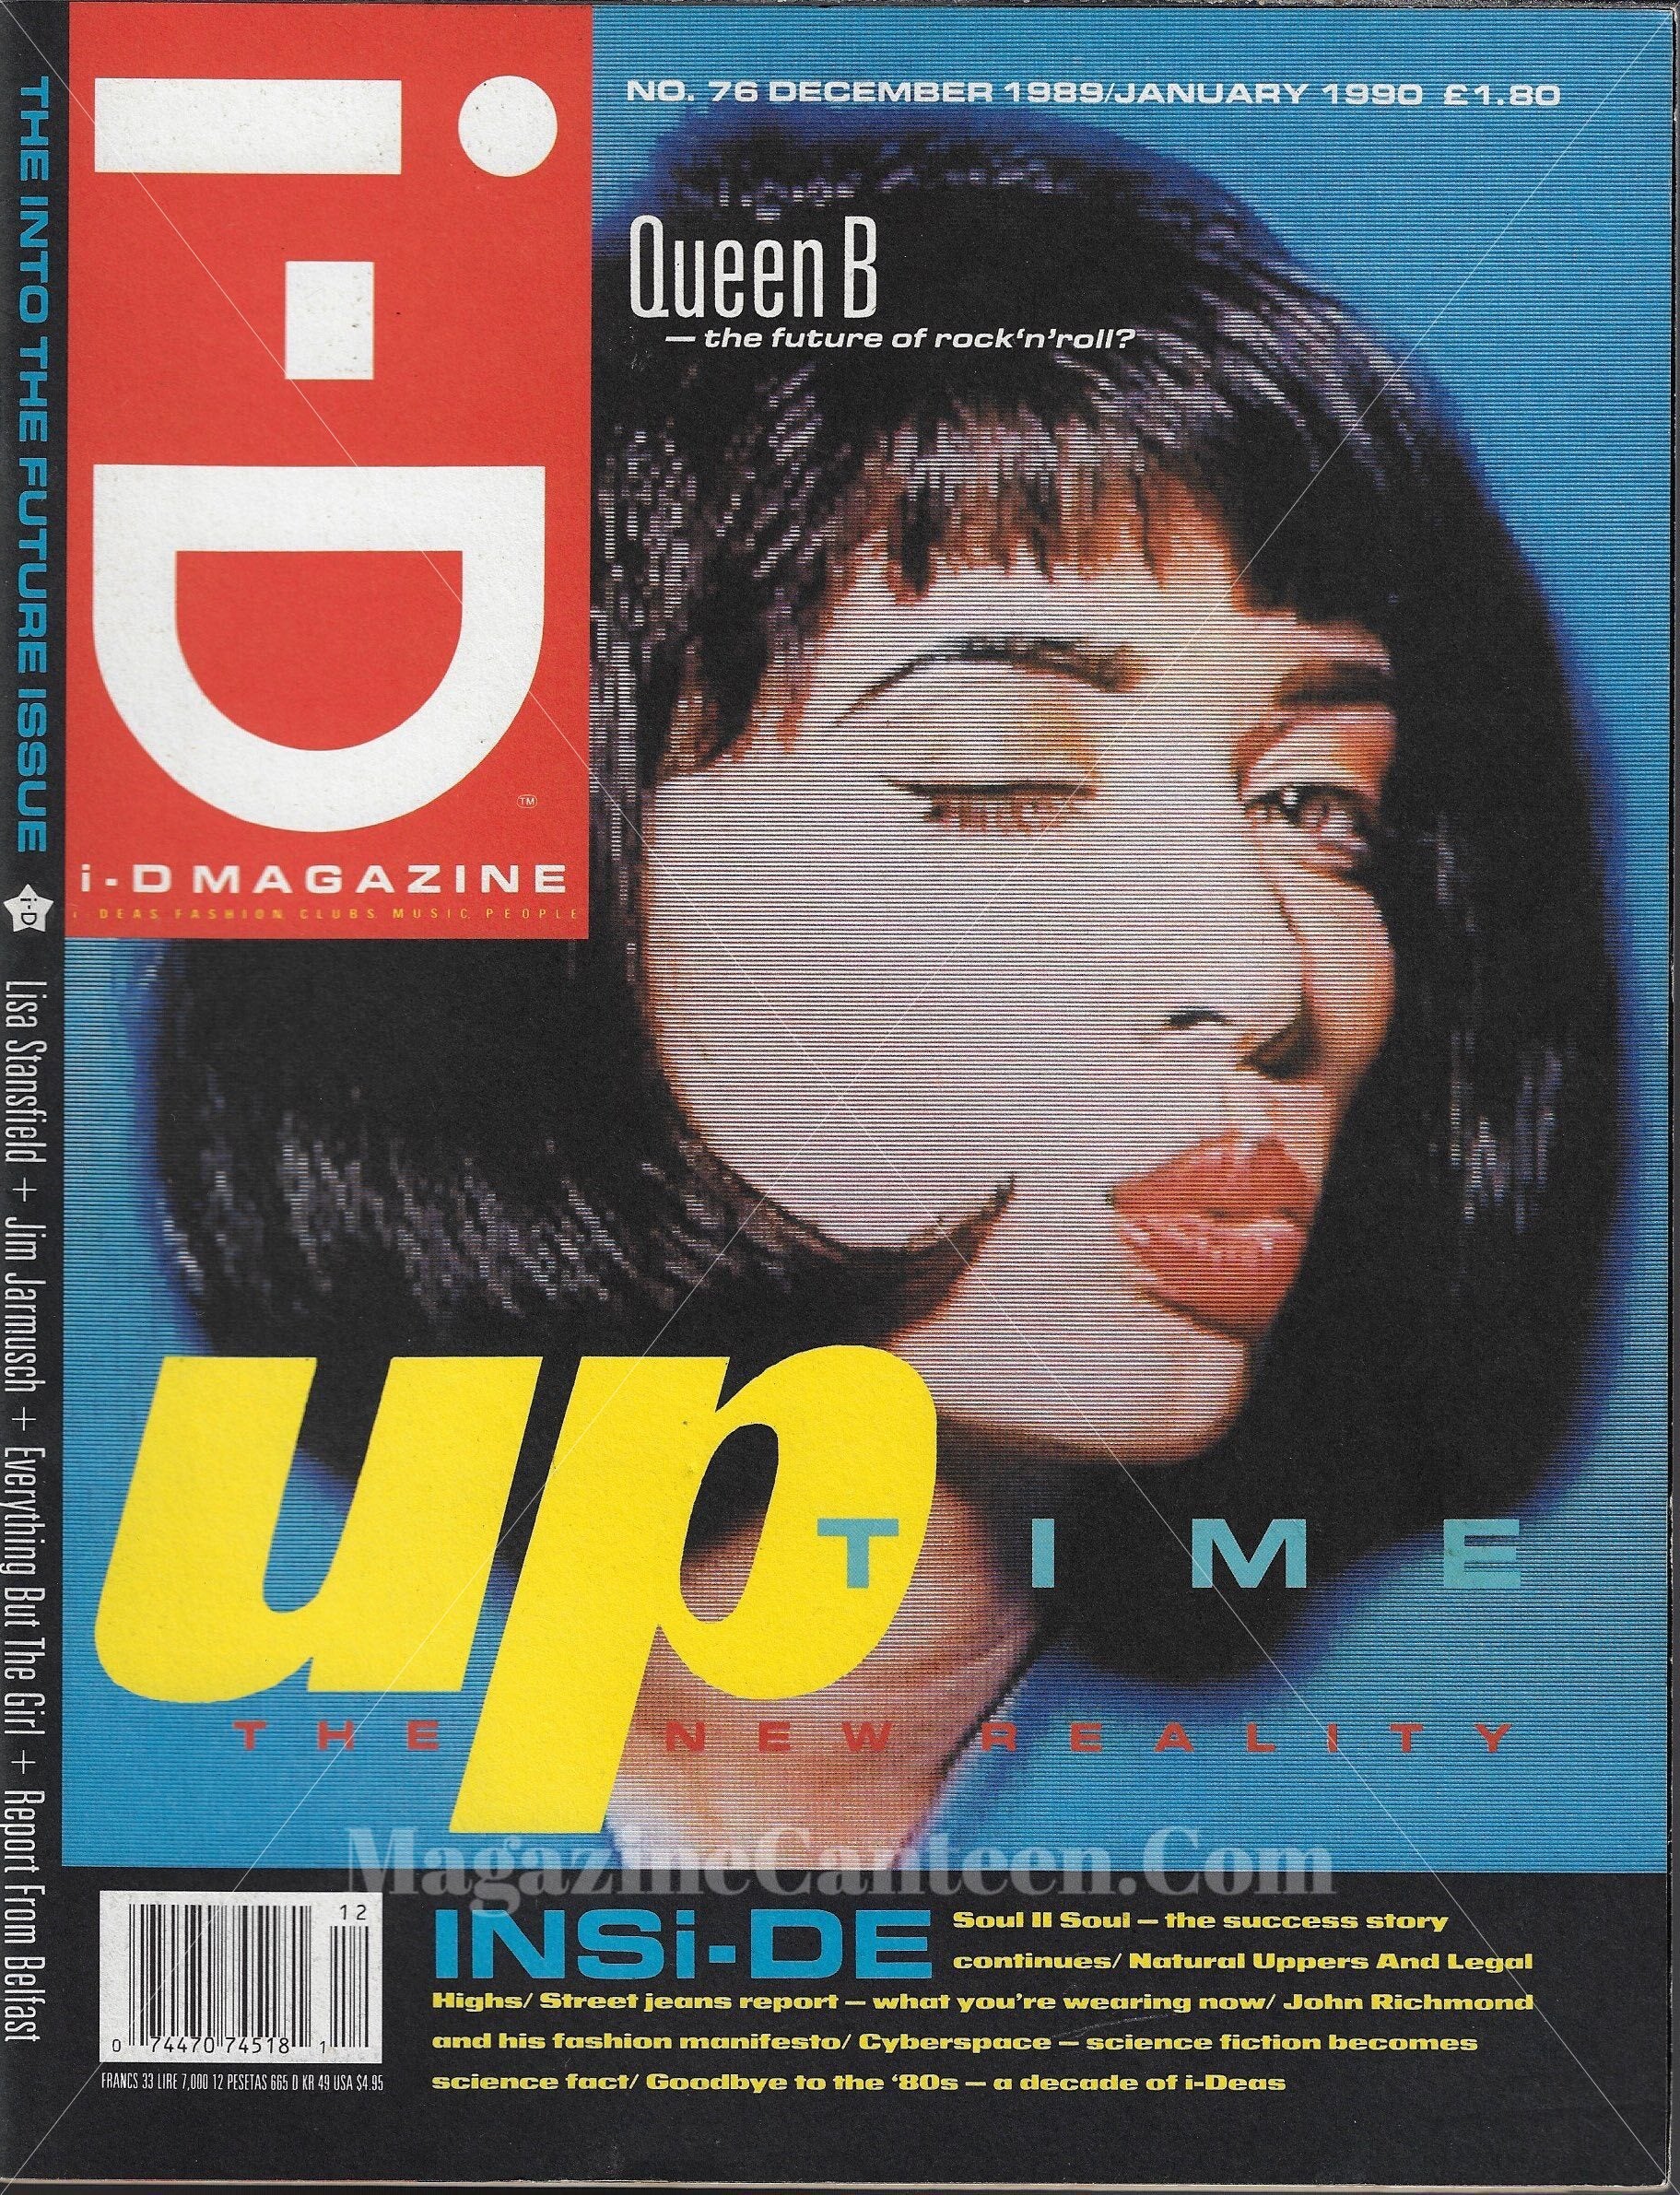 I-D Magazine 76 - Queen B 1989